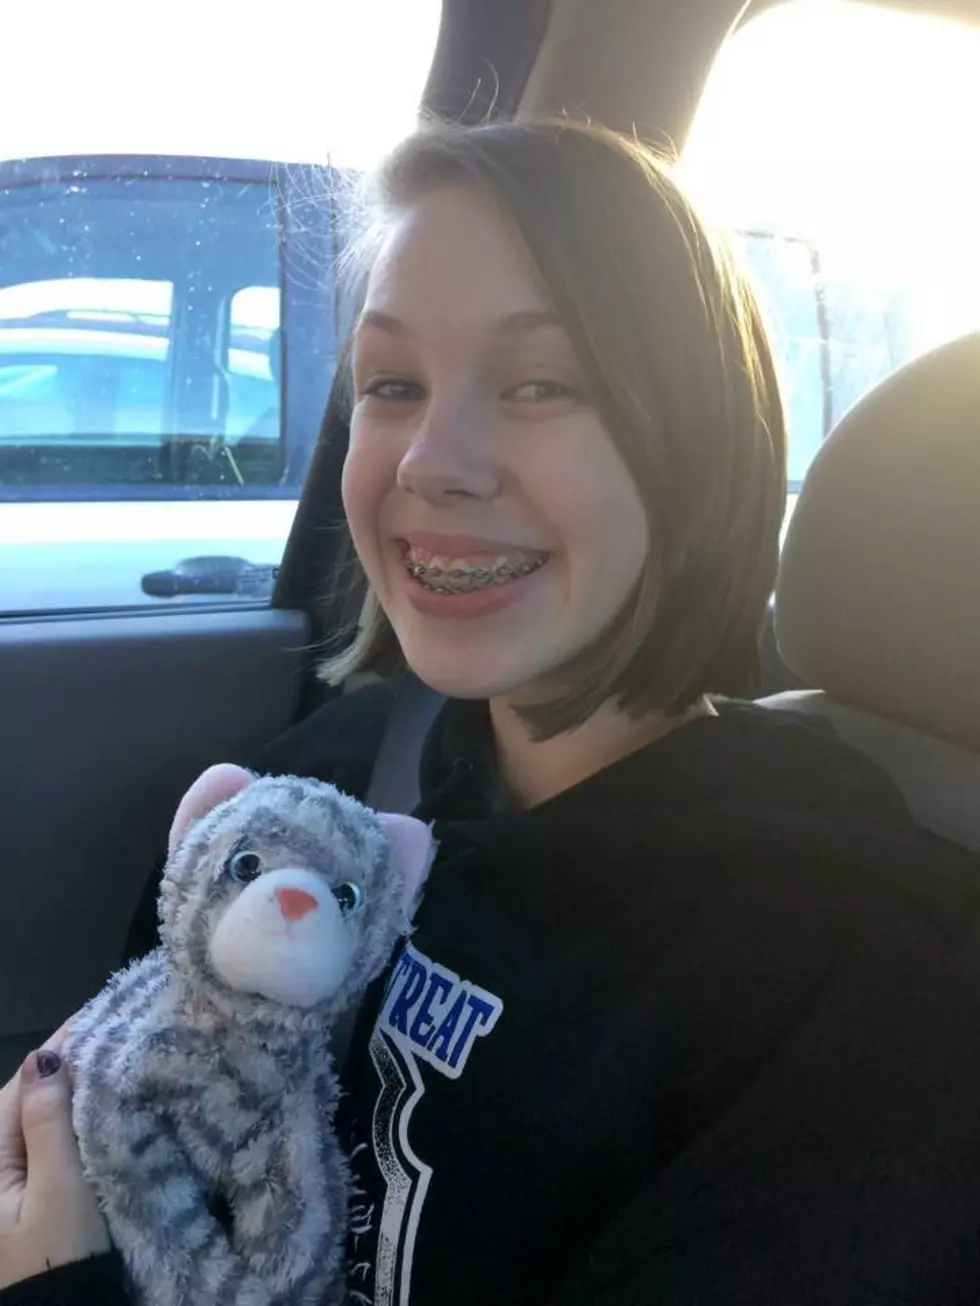 #MotivationMonday: Rochester Girl Sends Kindness to Denver Child